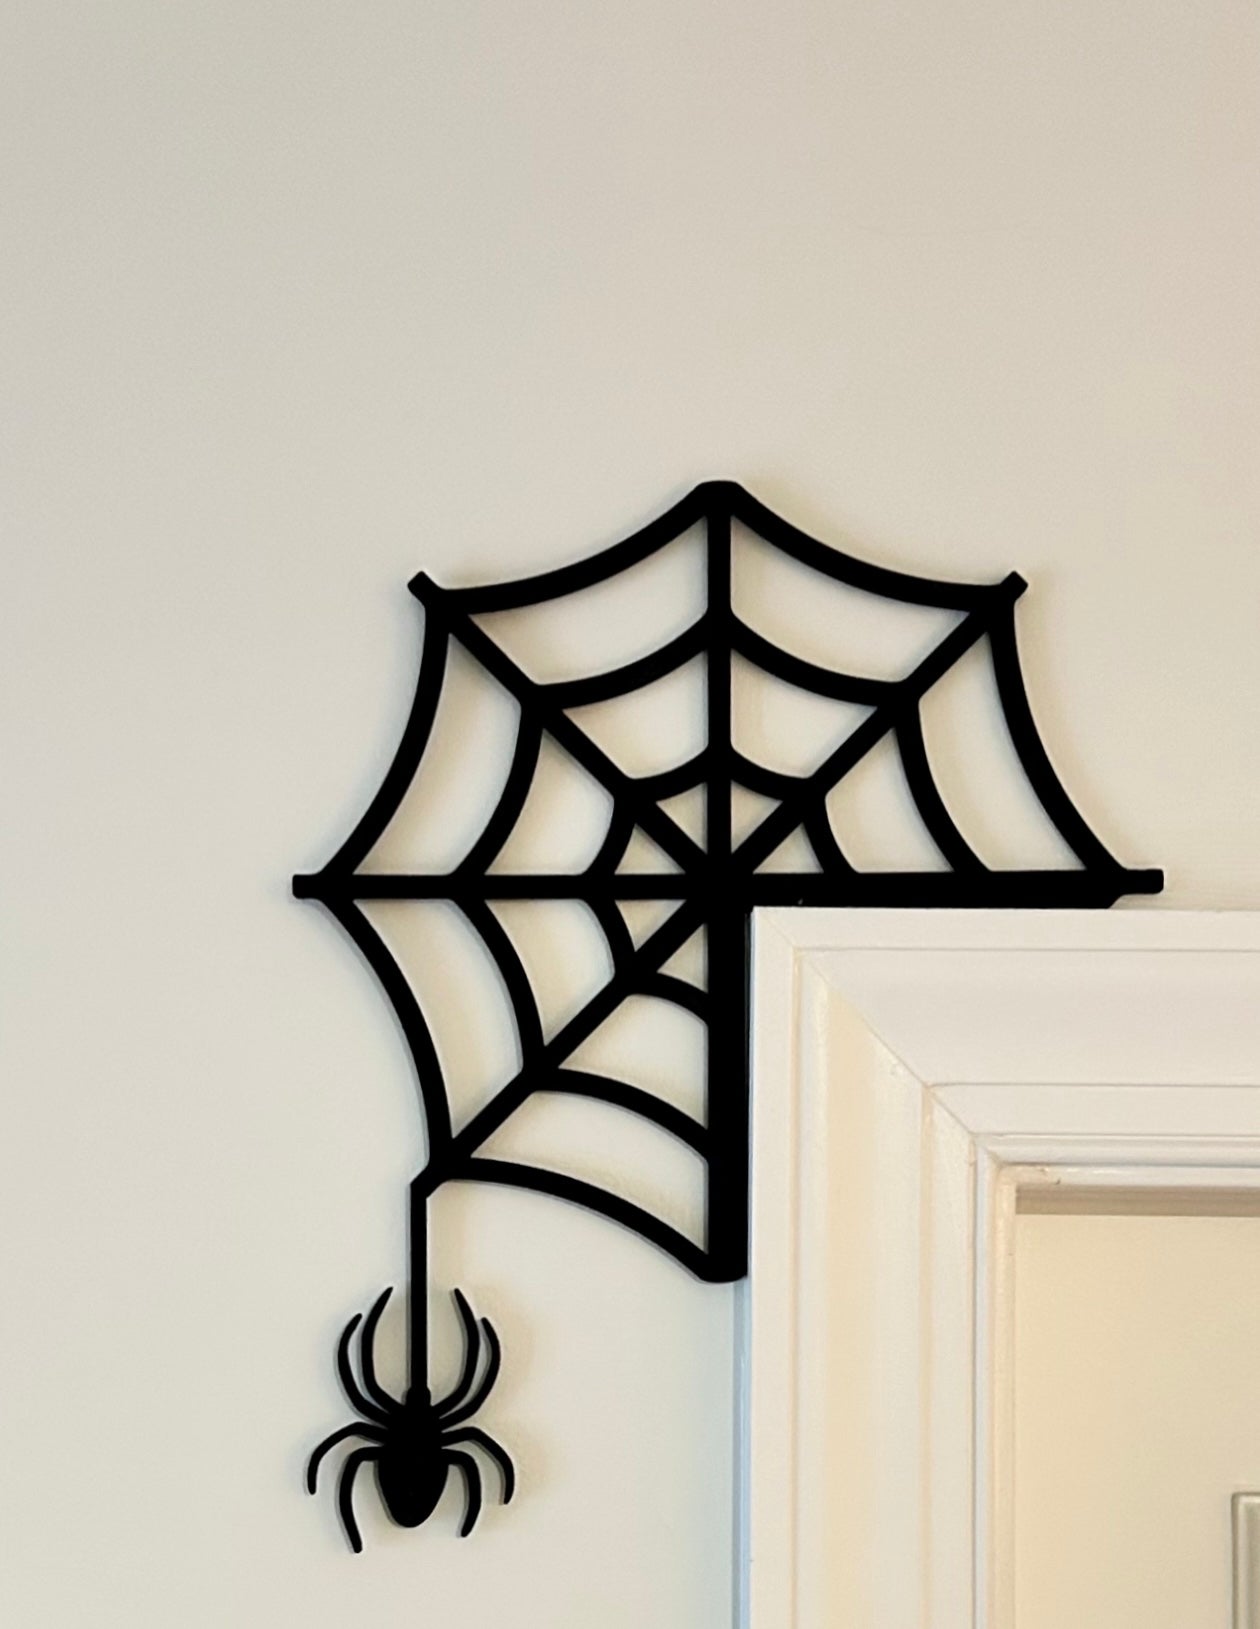 Spider and web trim corner